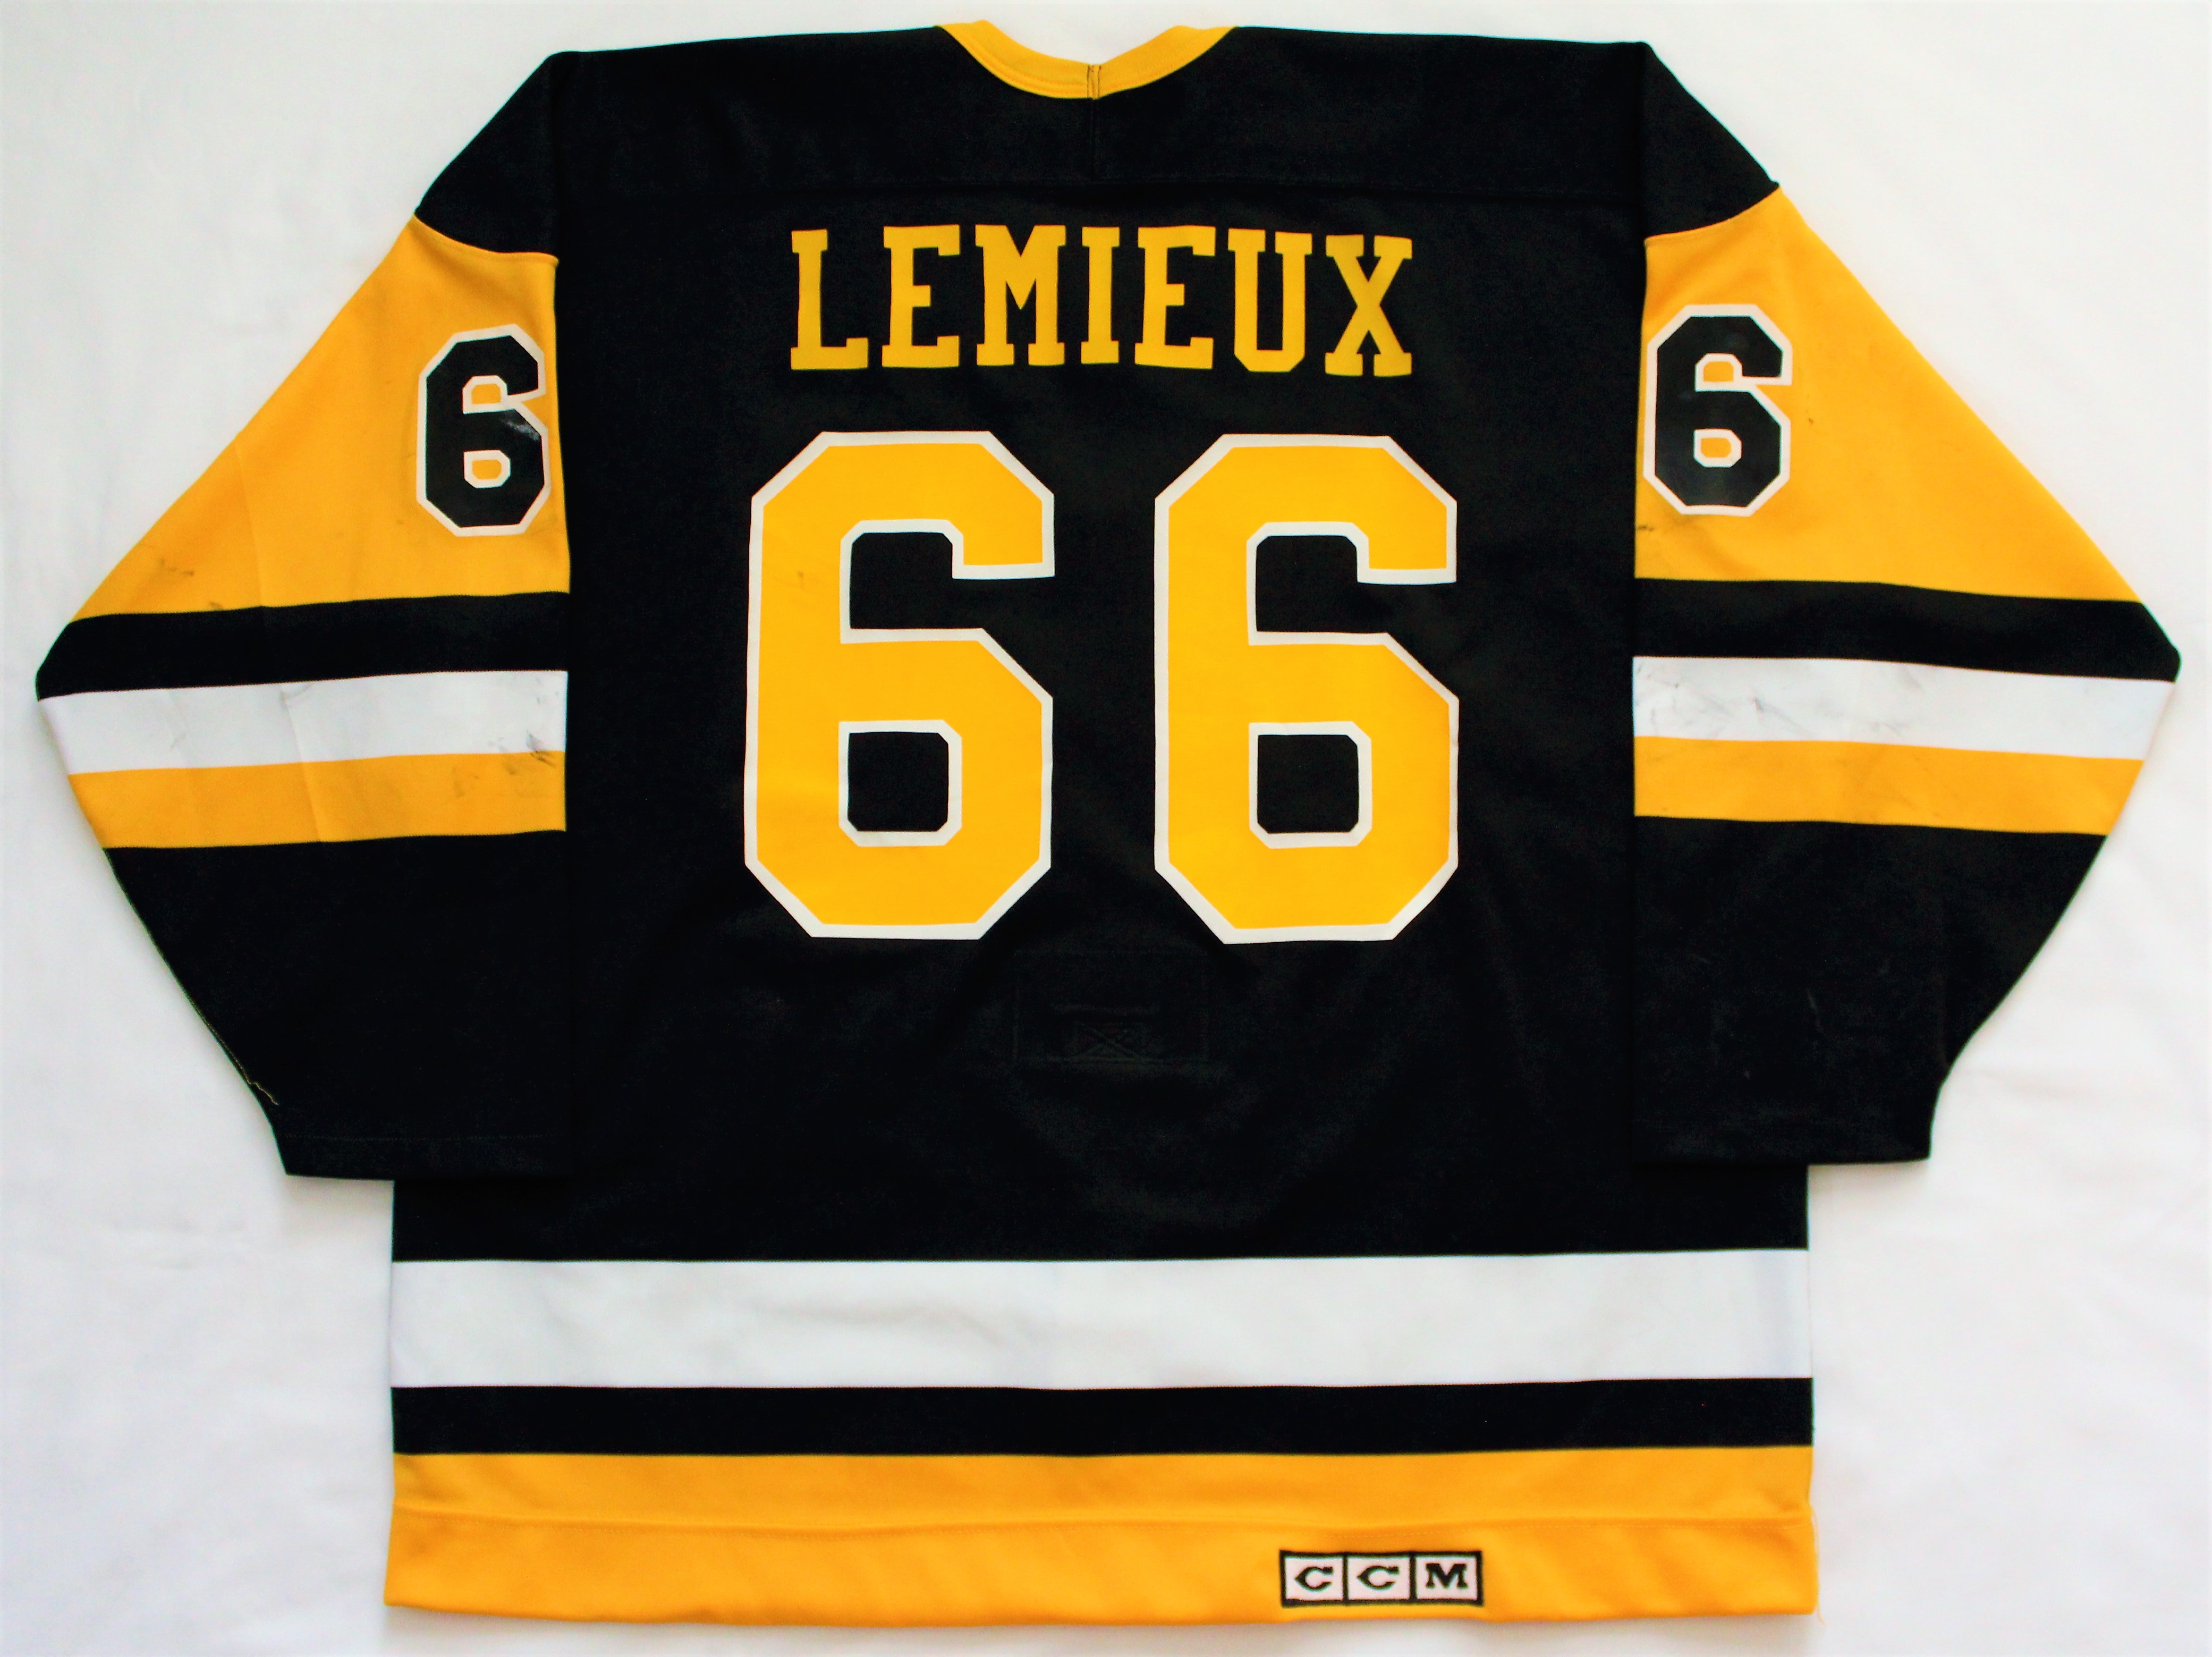 mario lemieux jersey number